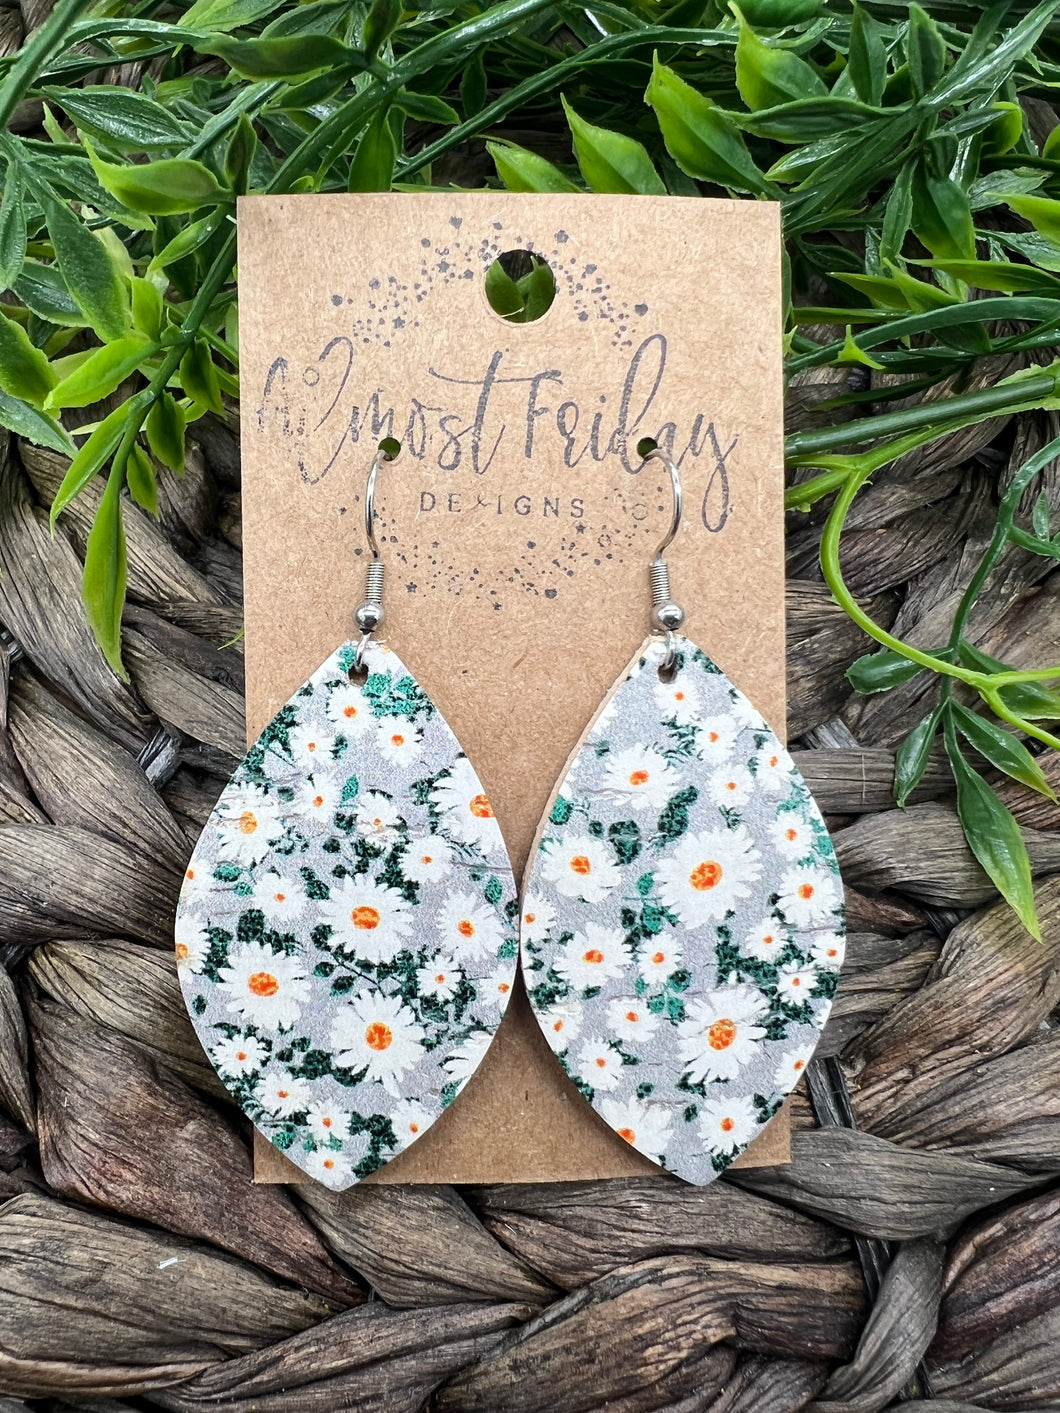 Genuine Leather Earrings - Leaf Cut - Daisies - Floral - Yellow - Green - Flowers - White - Summer Earrings - Statement Earrings - Spring - Flowers